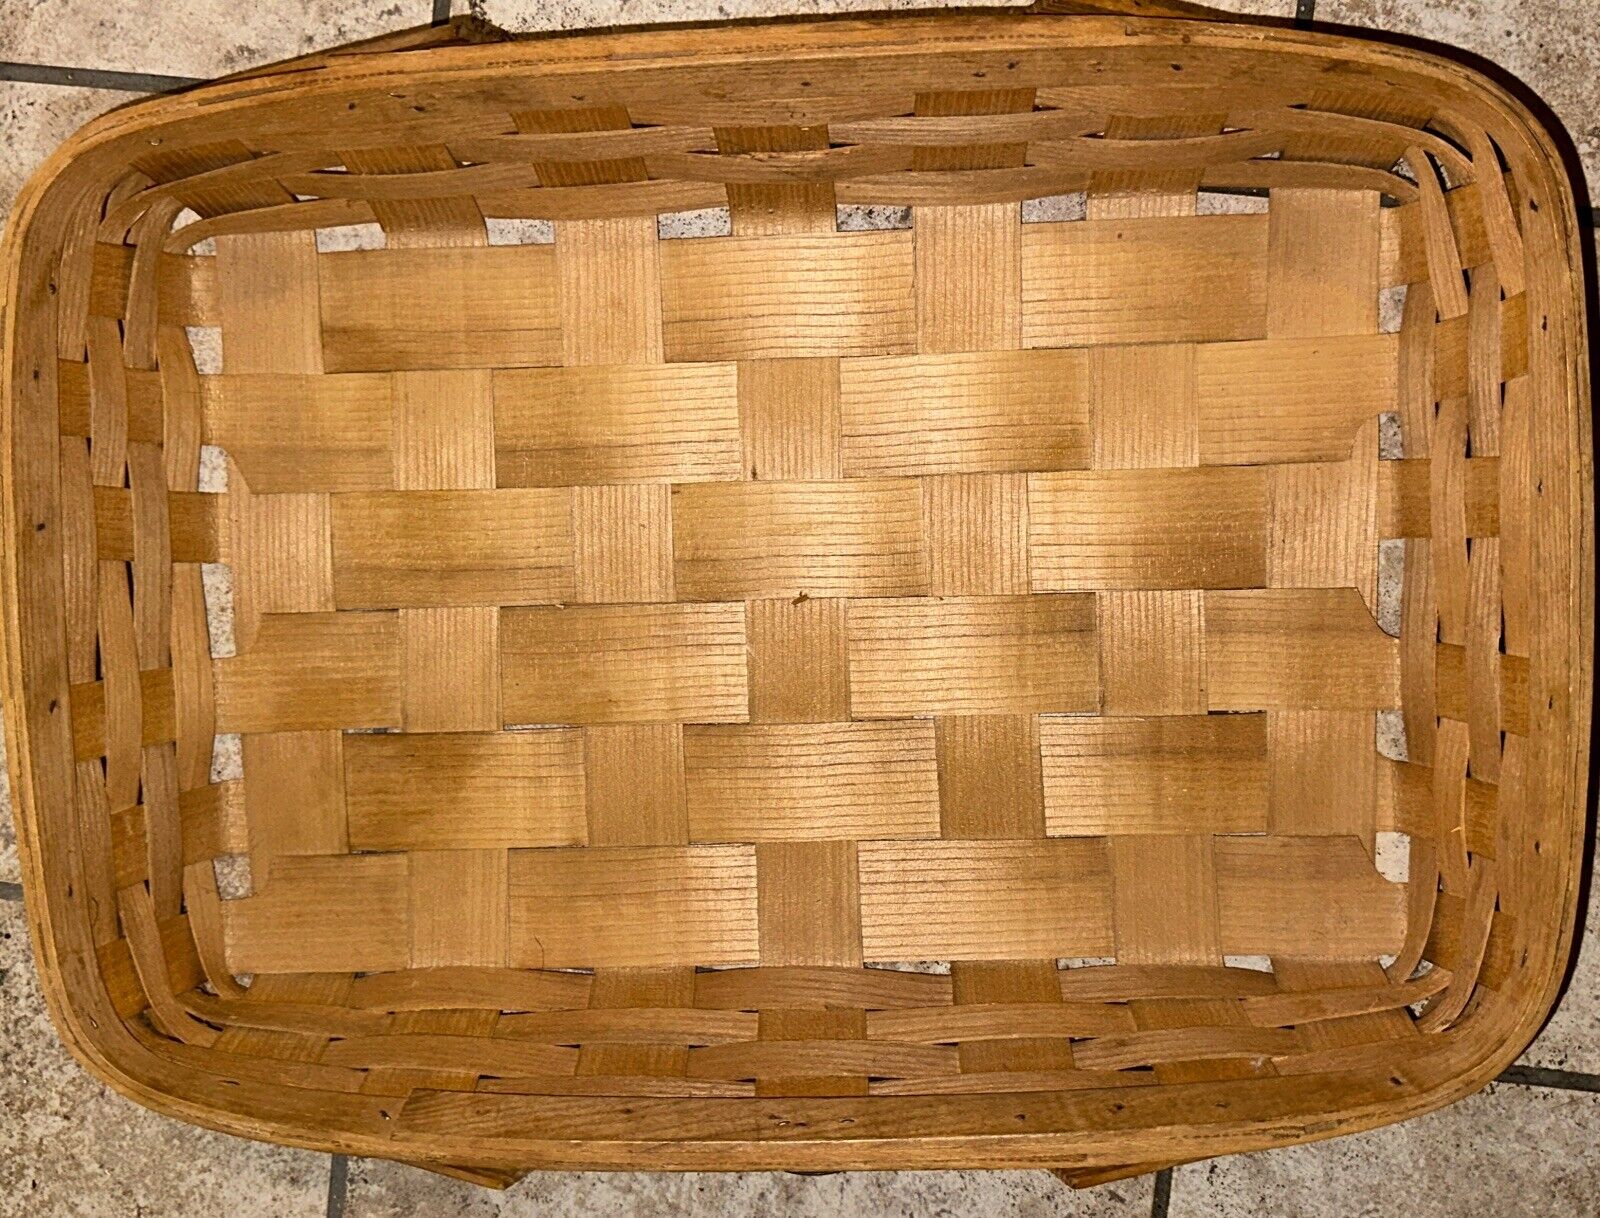 Peterboro Basket Co. Completely Wooden Basket